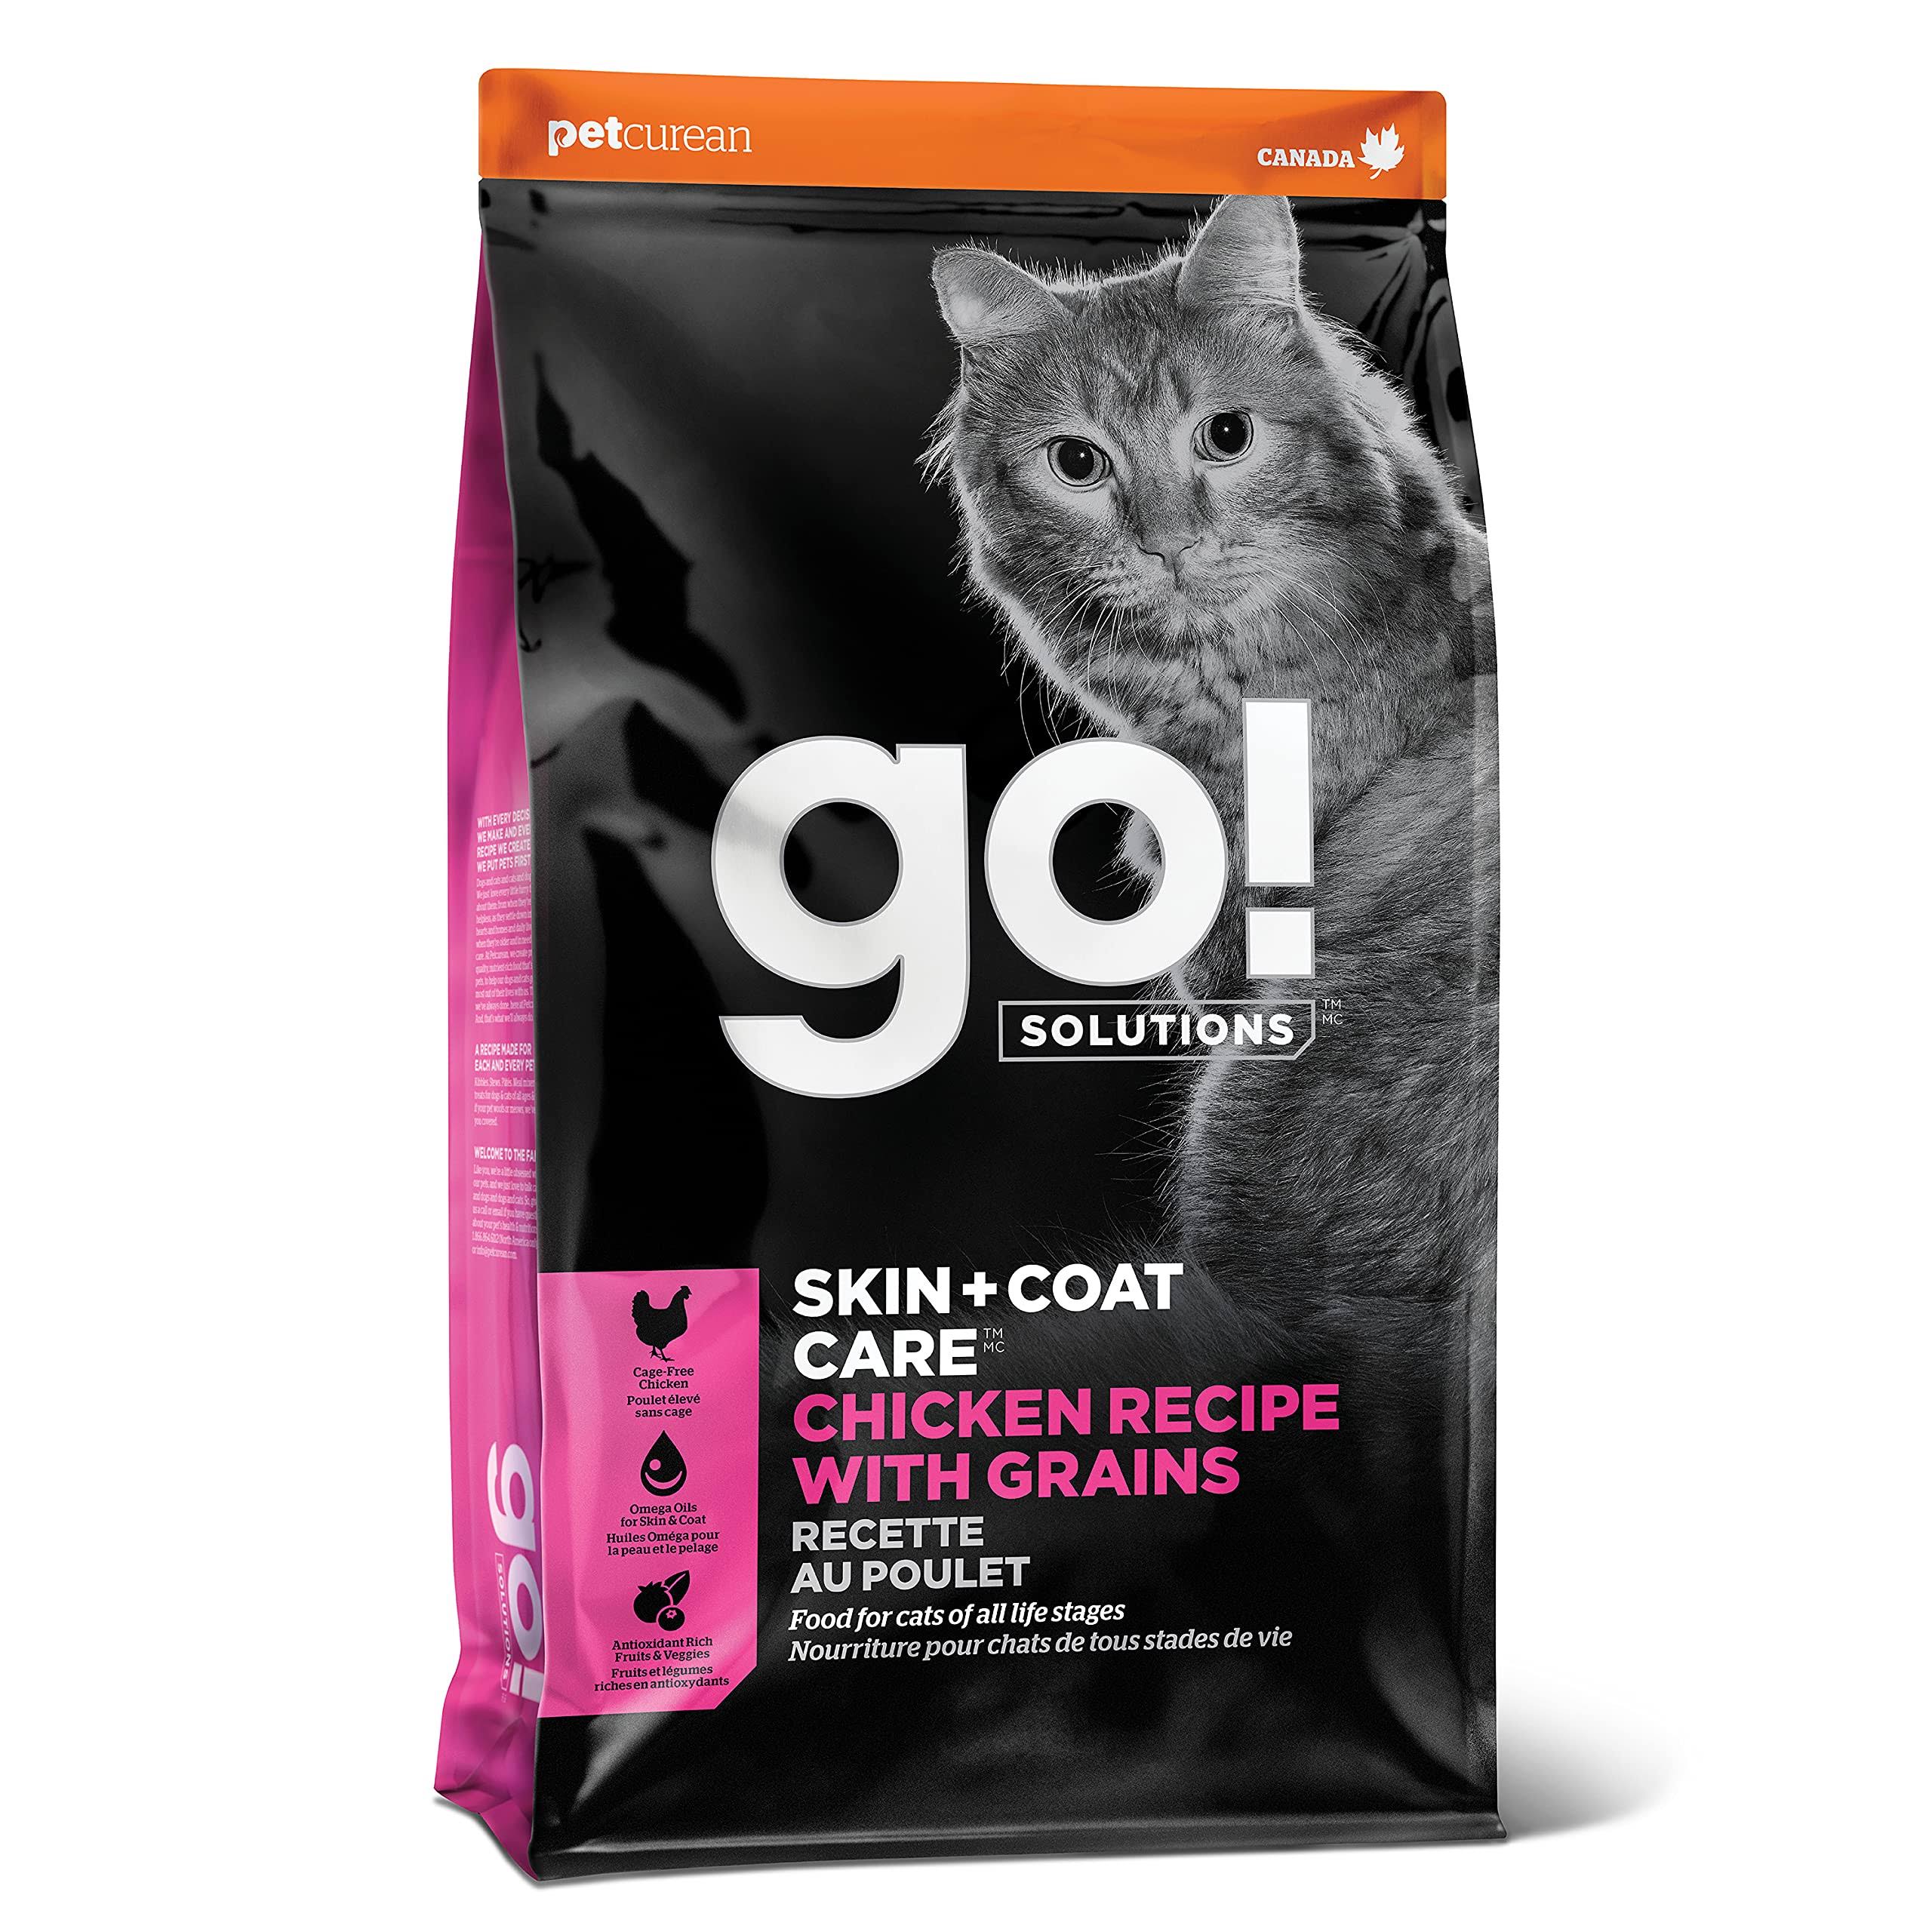 Go! Solutions Skin + Coat Care Chicken Recipe Dry Cat Food, 3 lb